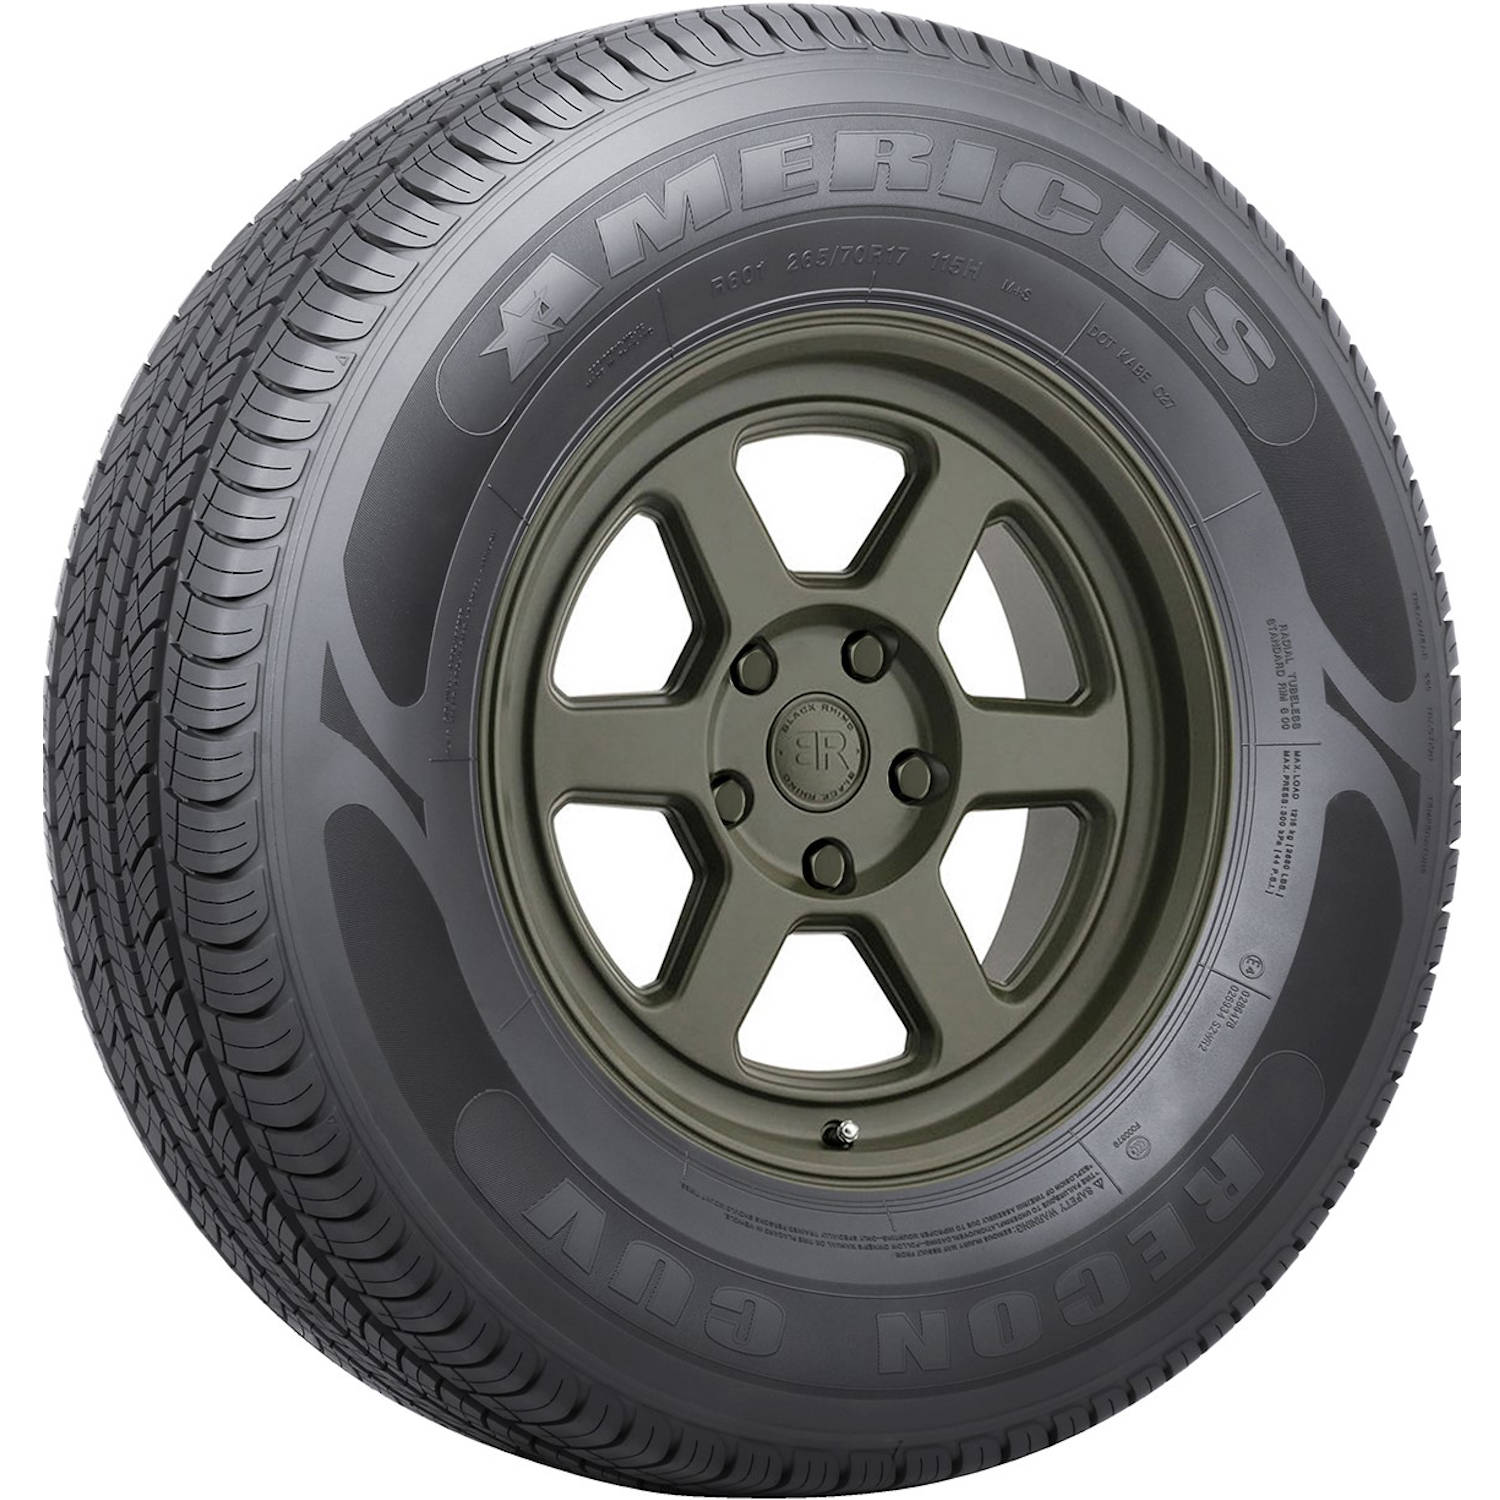 AMERICUS RECON CUV 255/55R18 XL (29X10R 18) Tires